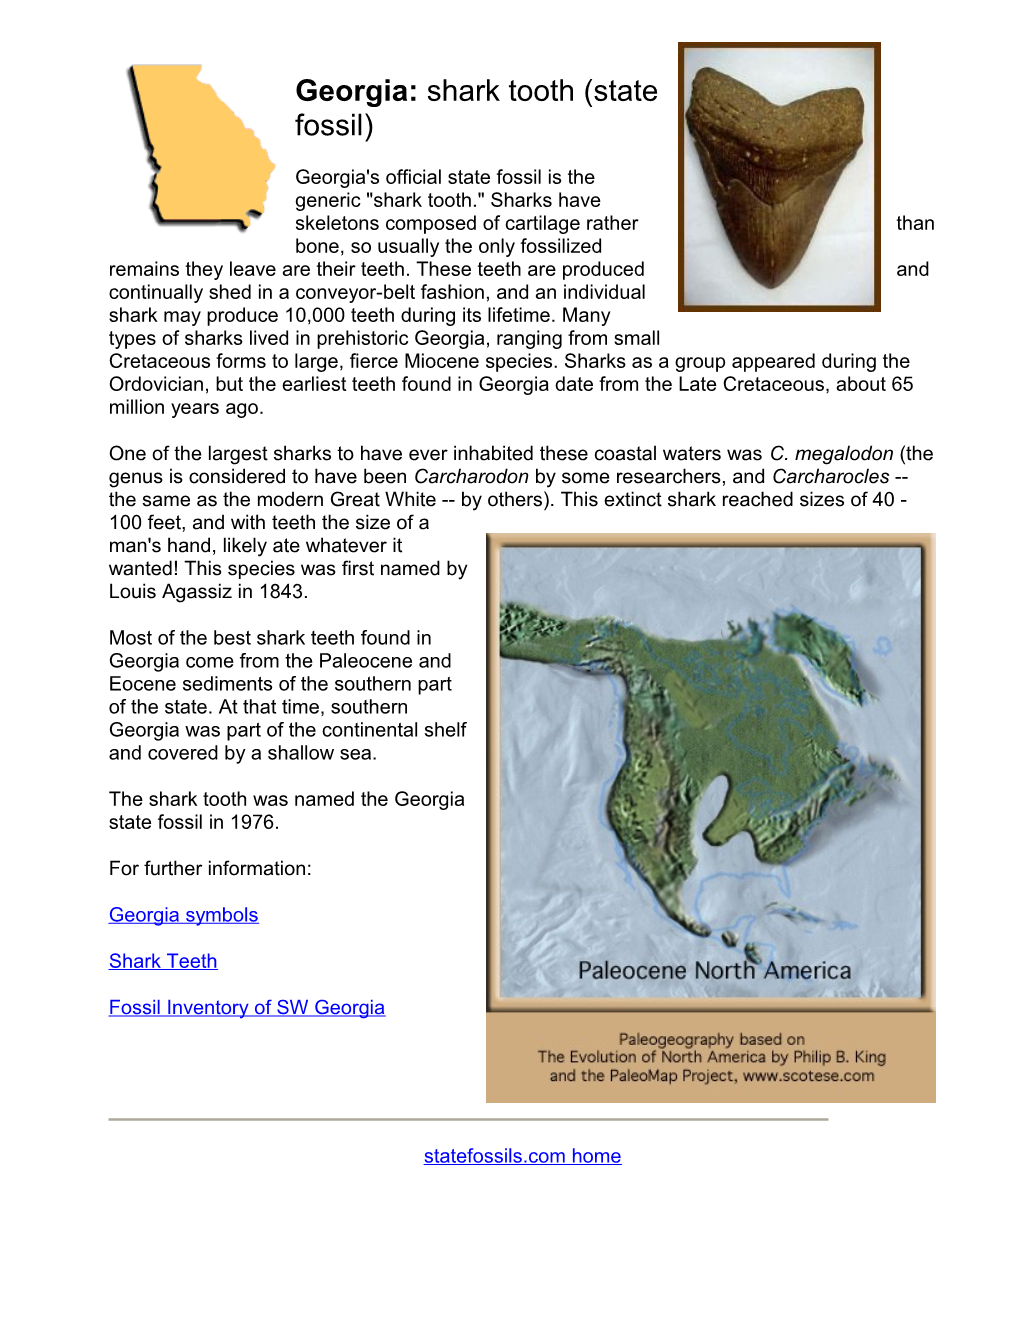 Georgia: Shark Tooth (State Fossil)